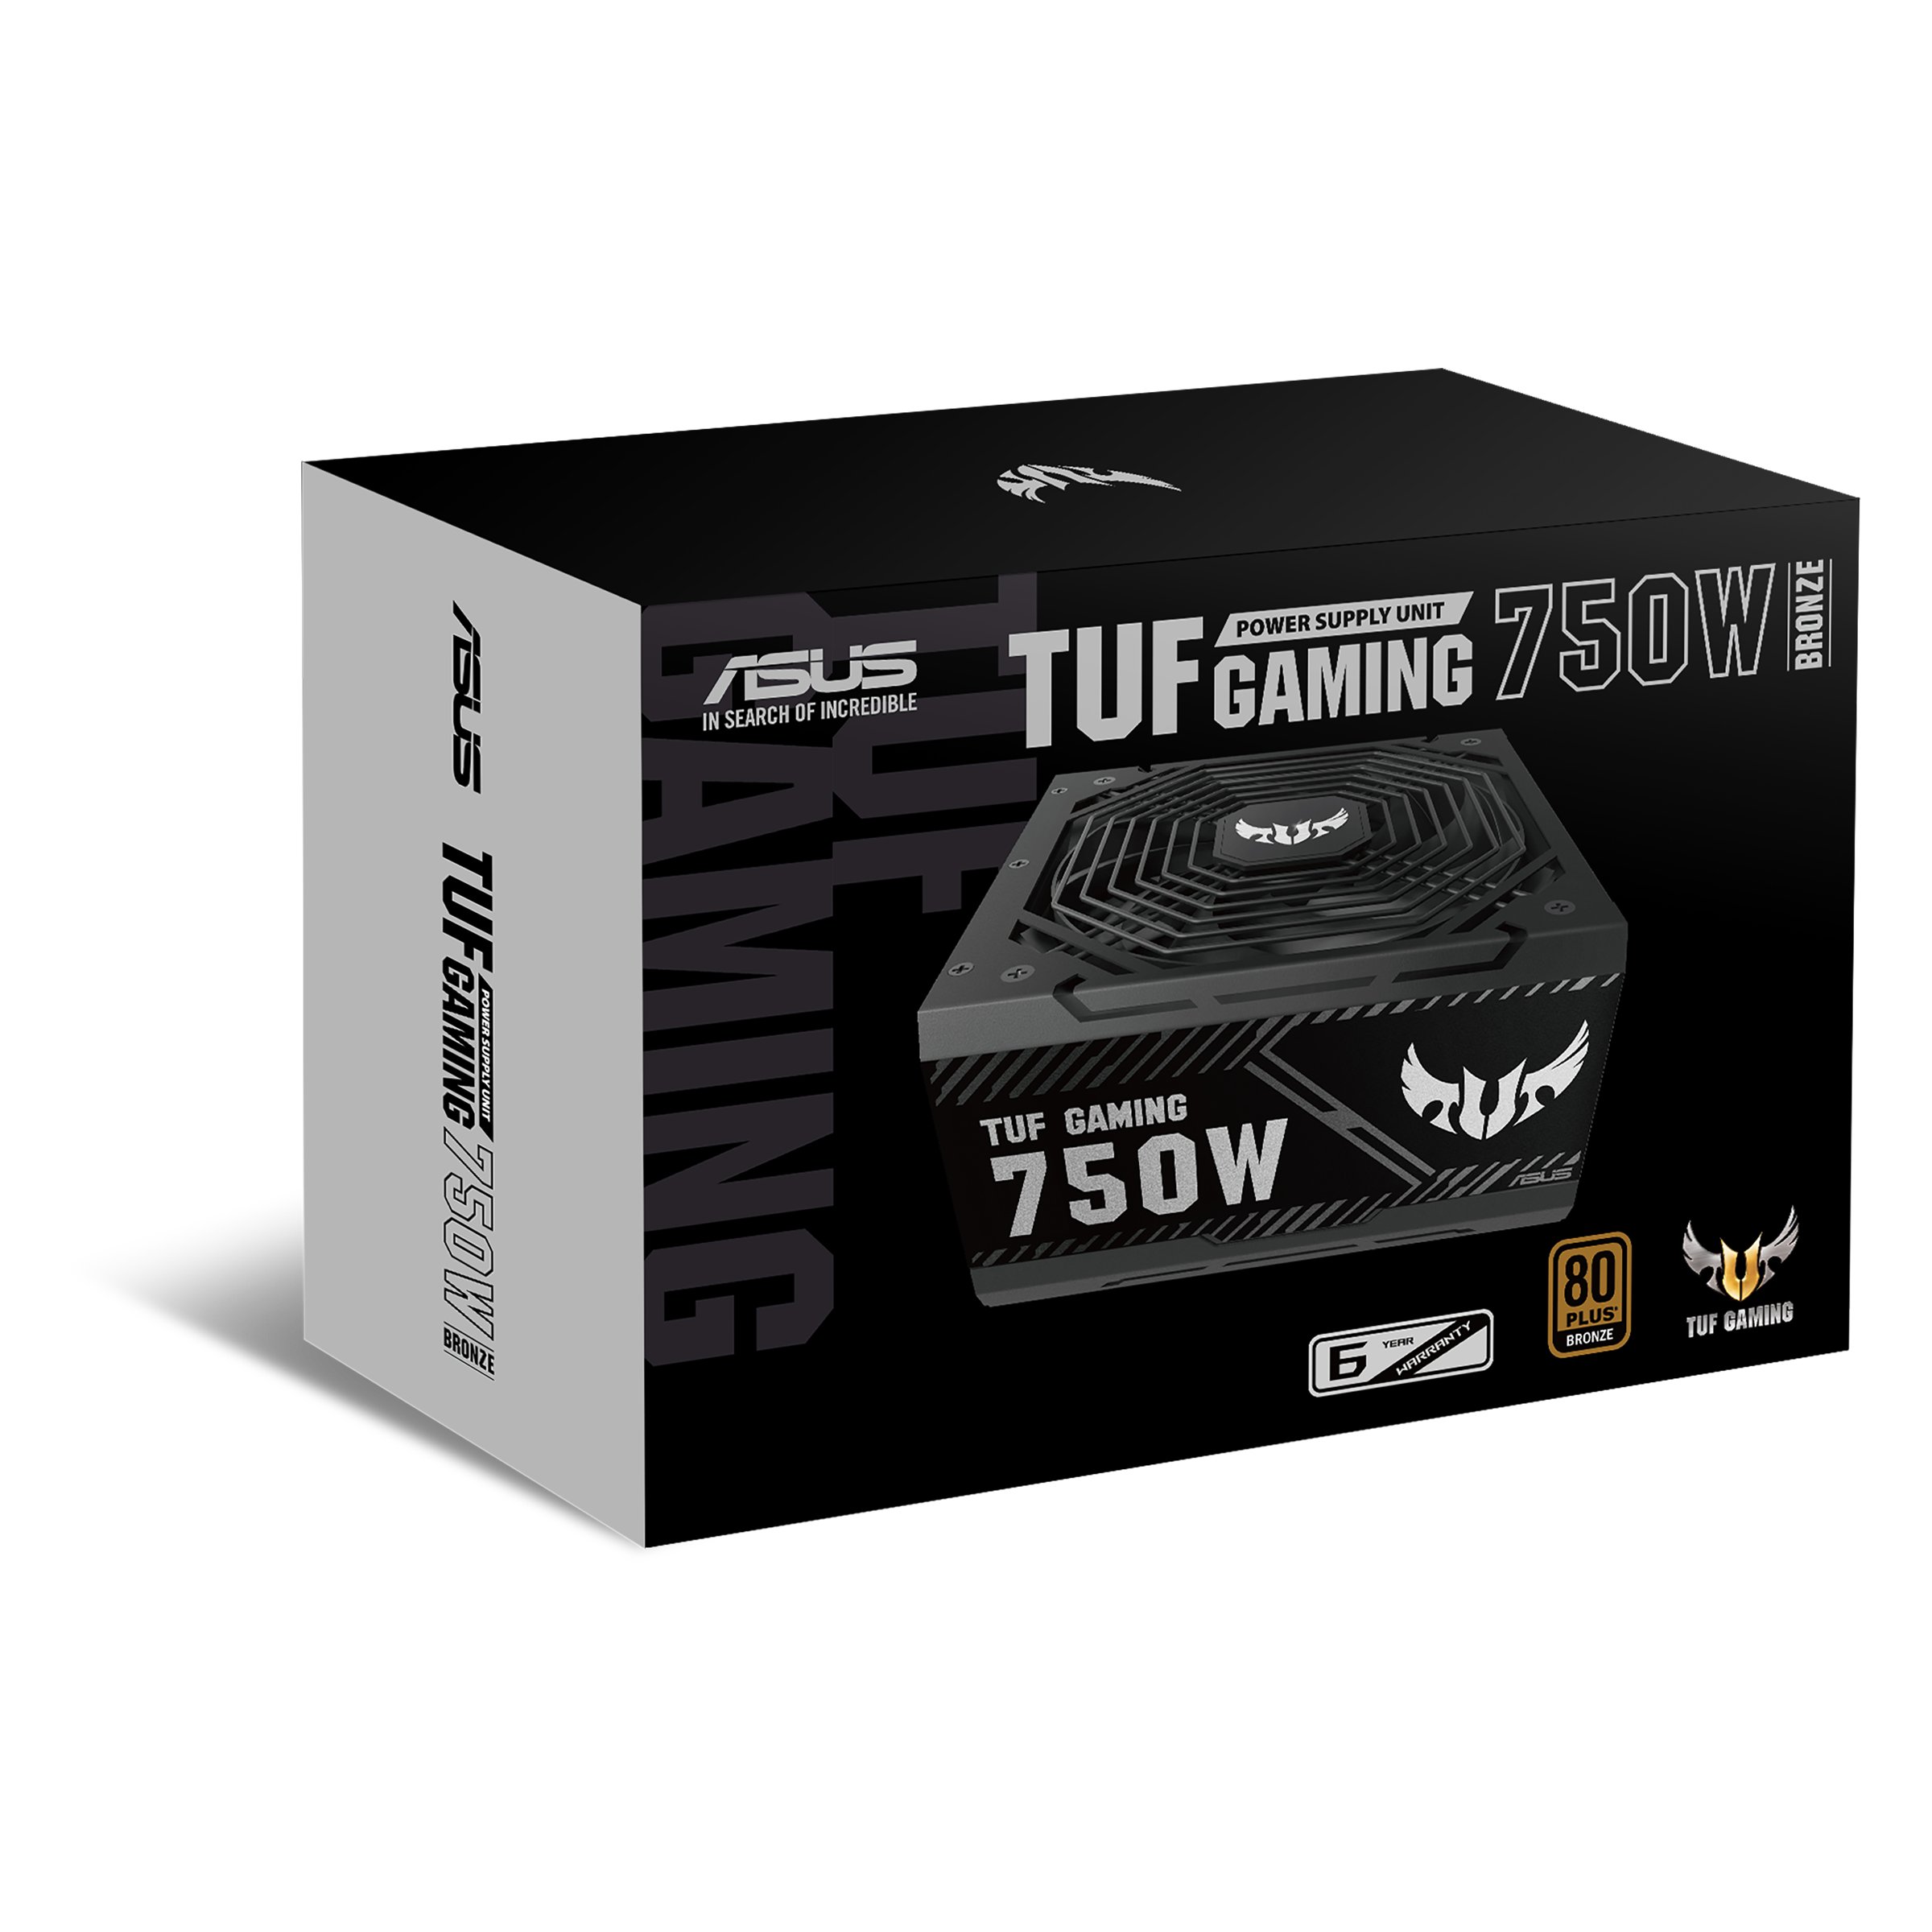 ASUS TUF Gaming 750W Bronze PSU Review - Hardware Busters